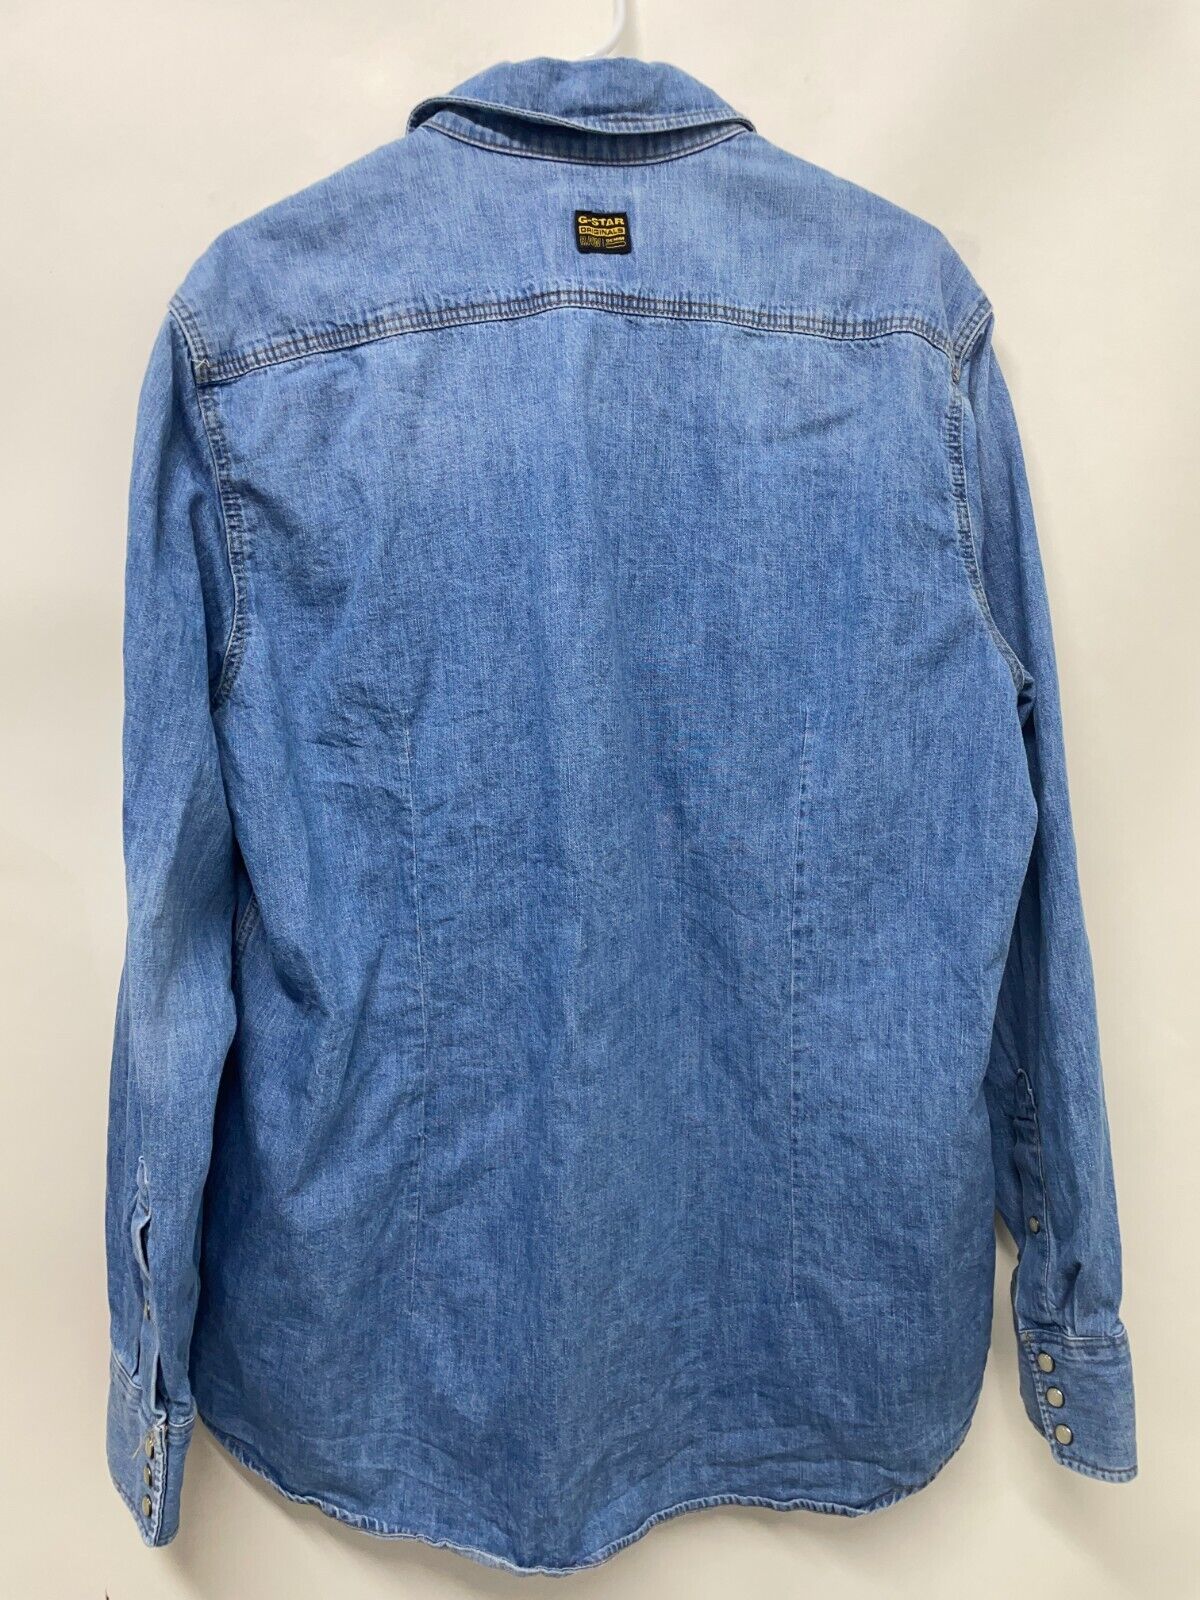 G-Star Unisex XL 3301 Slim Shirt Long Sleeve Medium Aged Blue Western Snap Denim